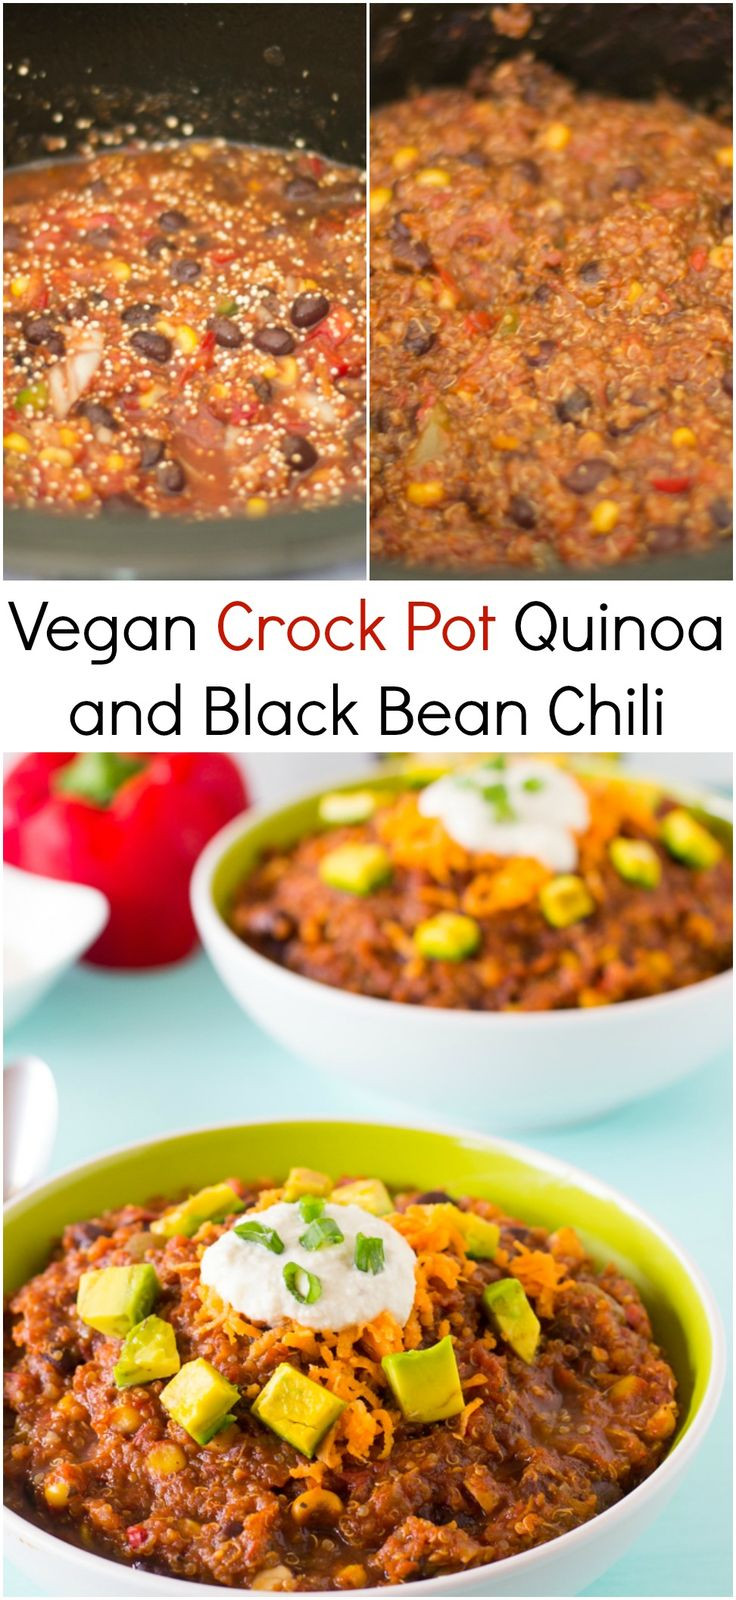 Healthy Vegetarian Crock Pot Recipes
 17 Best images about Vegan Crockpot Recipes on Pinterest